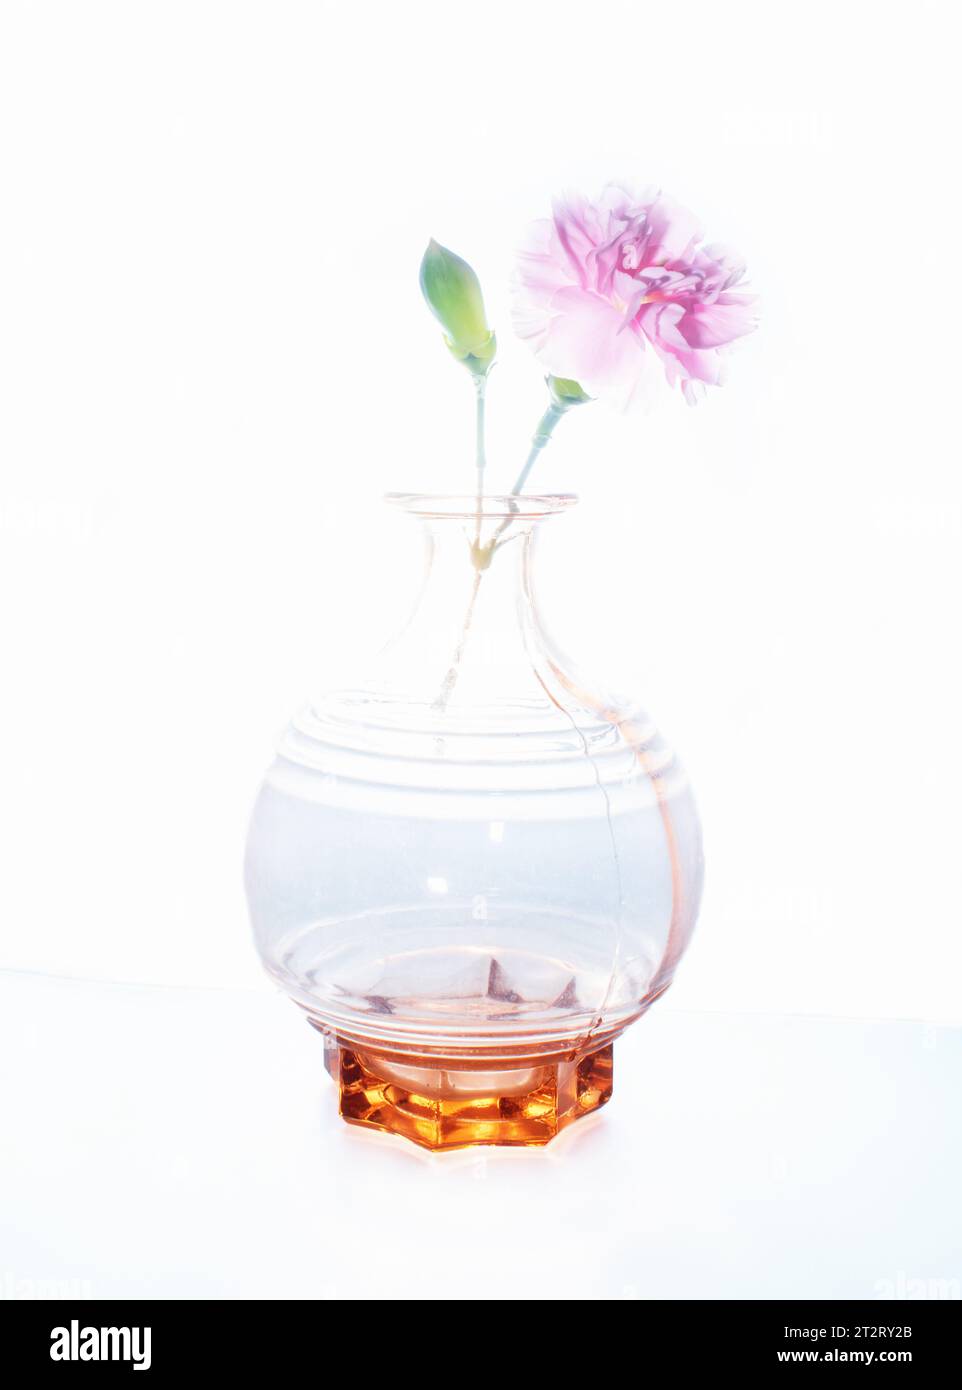 Un singolo garofano rosa delicato esposto in un vaso di vetro arancione traslucido Foto Stock